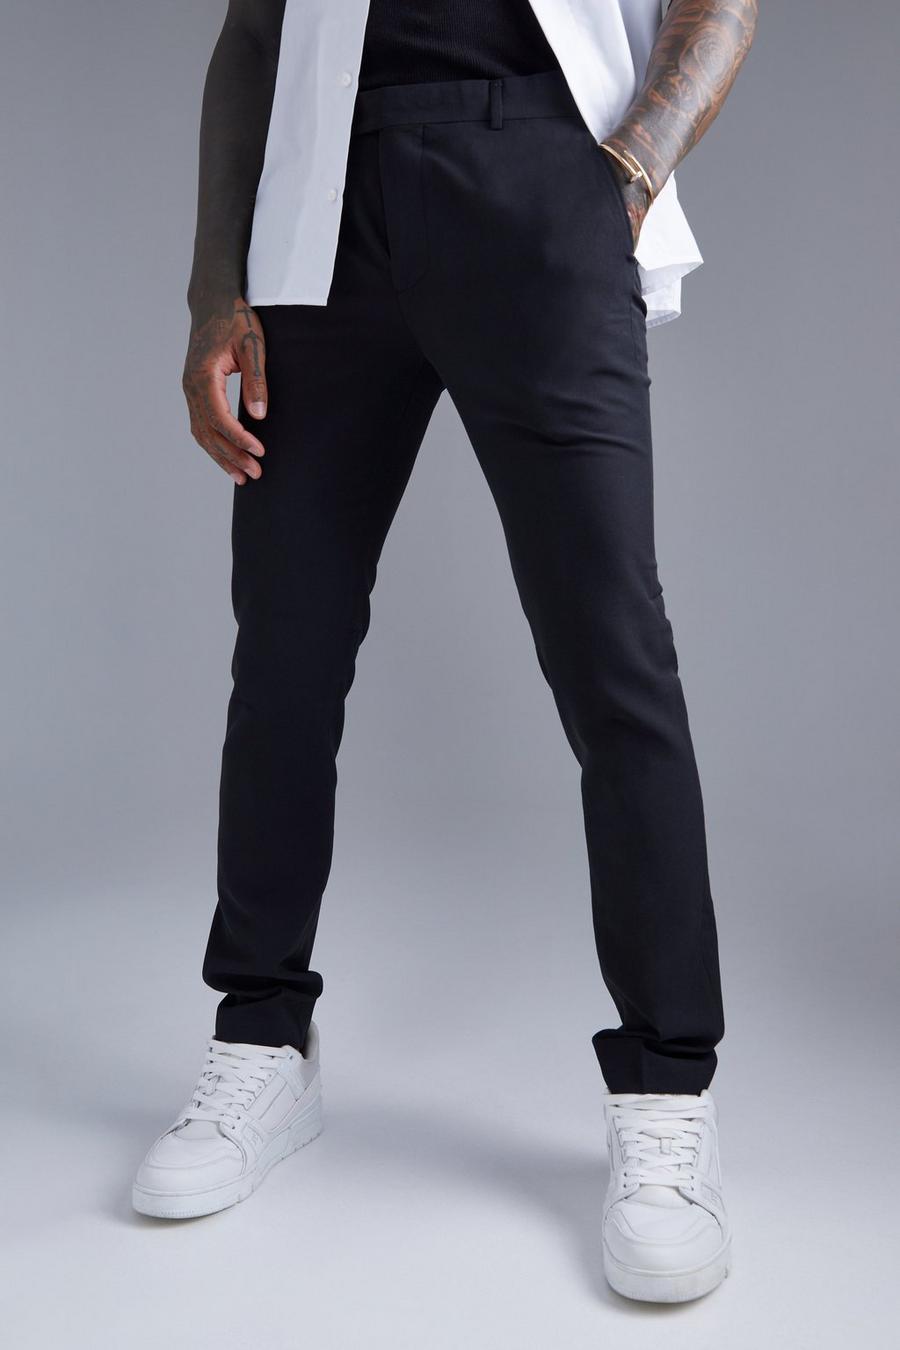 Black Skinny Smart Plain Trouser With Chain